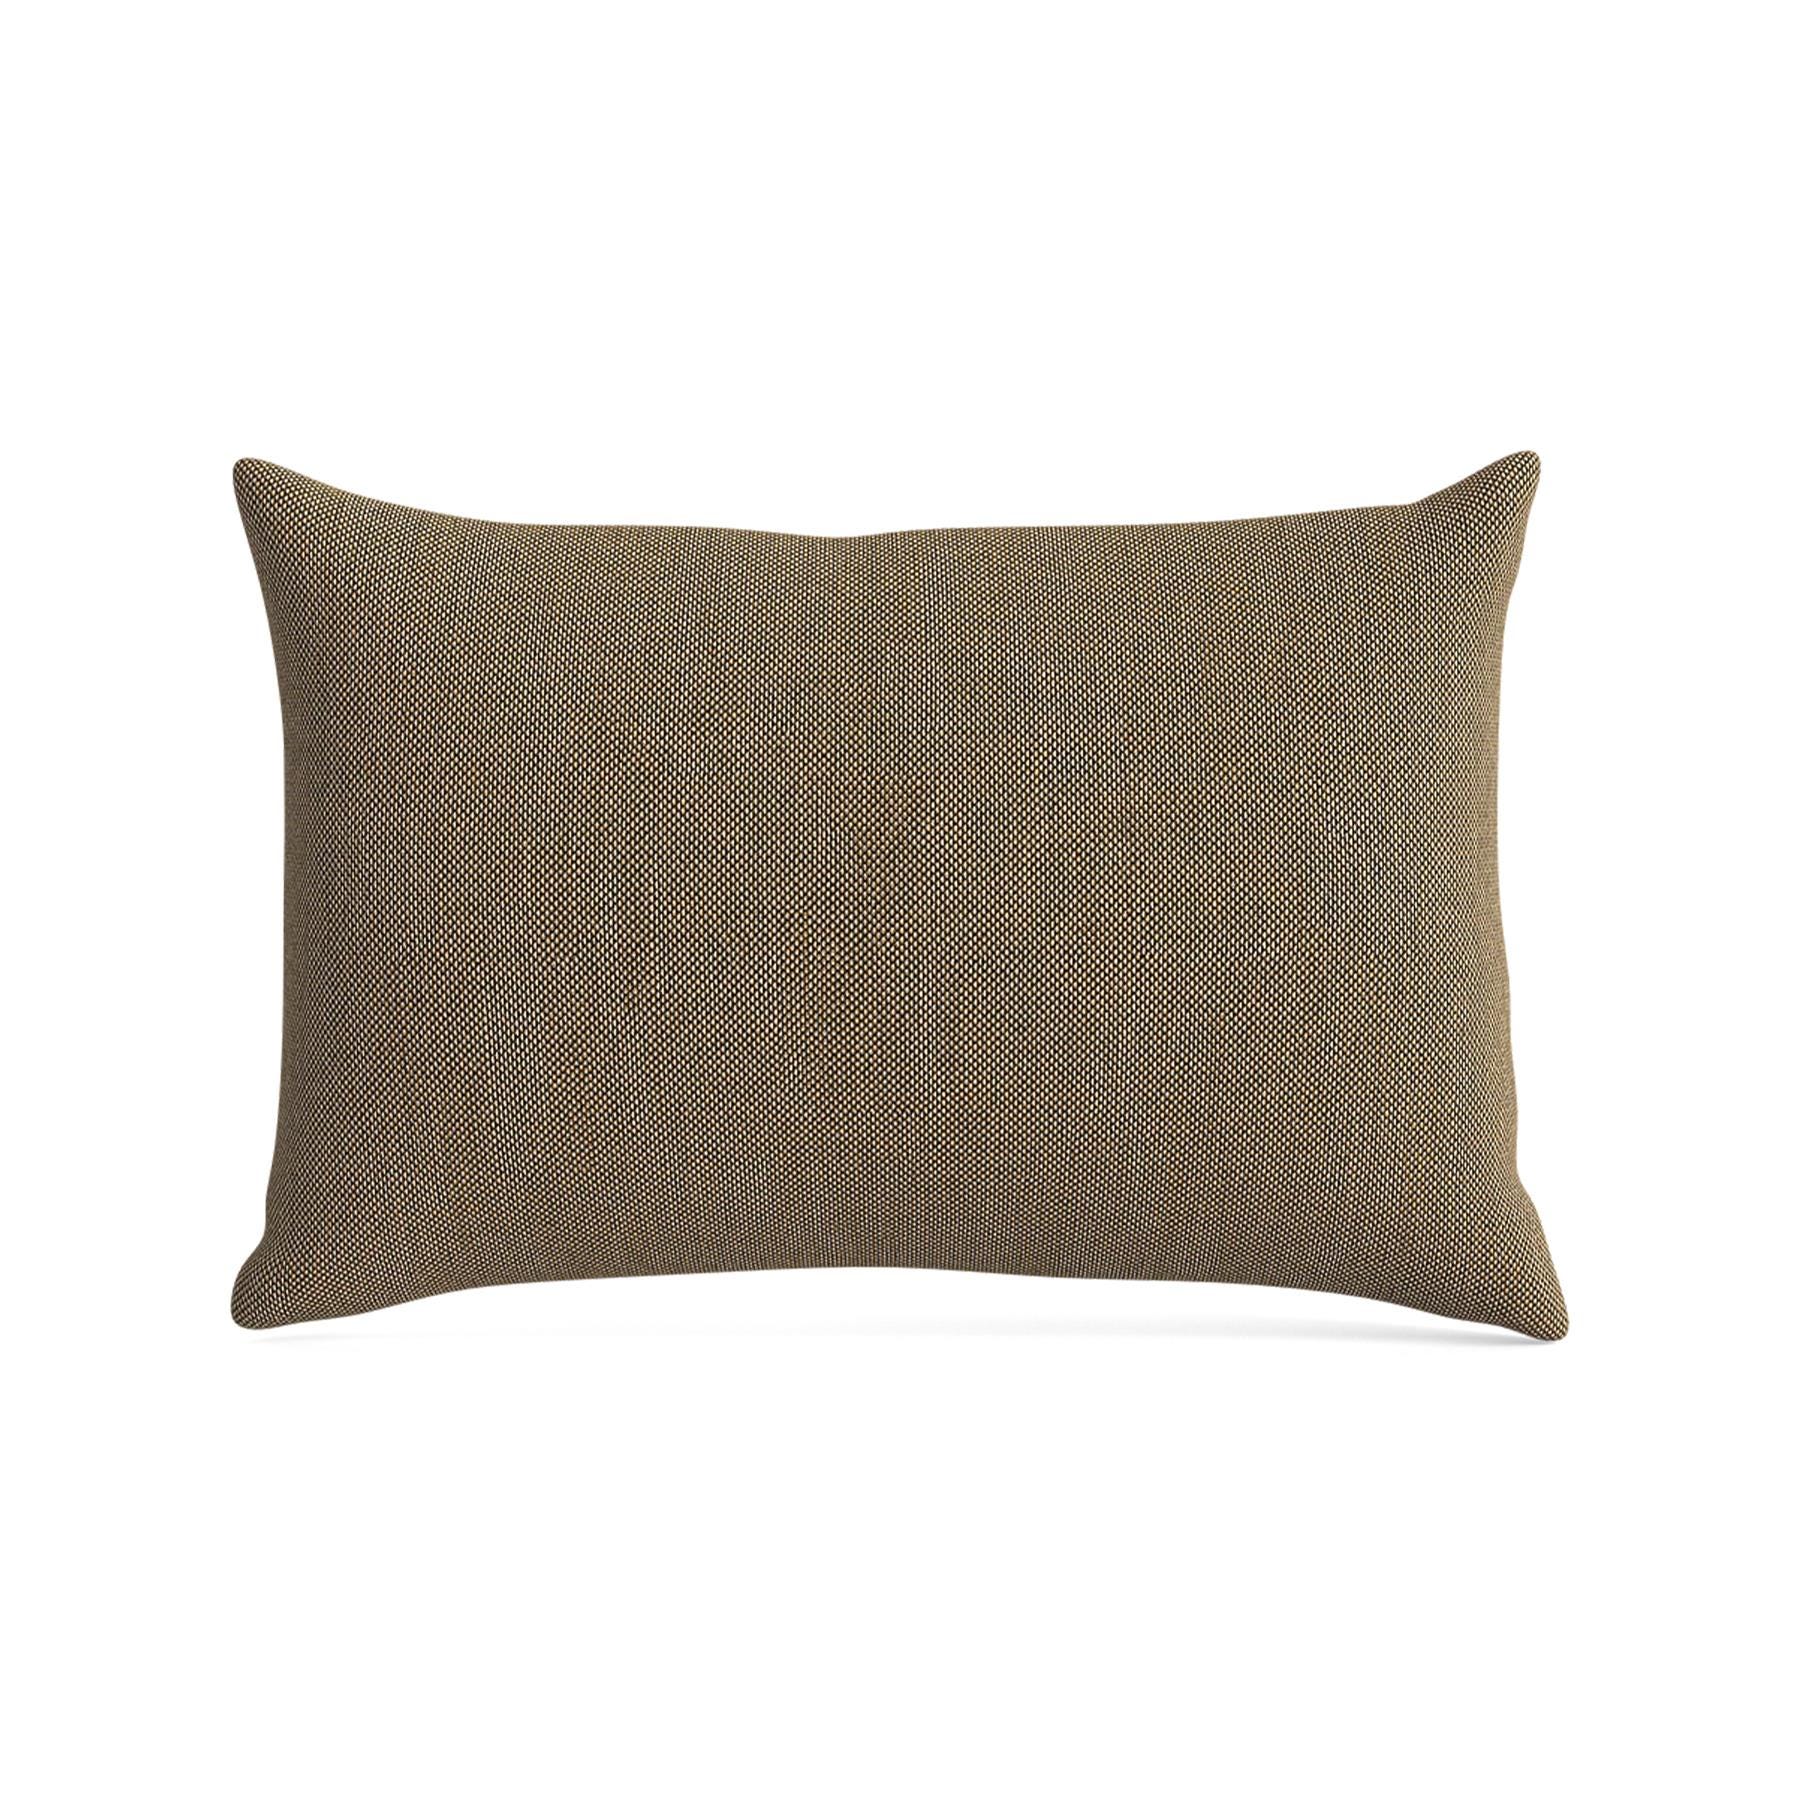 Make Nordic Pillow 40cmx60cm Rewool 358 Down And Fibers Brown